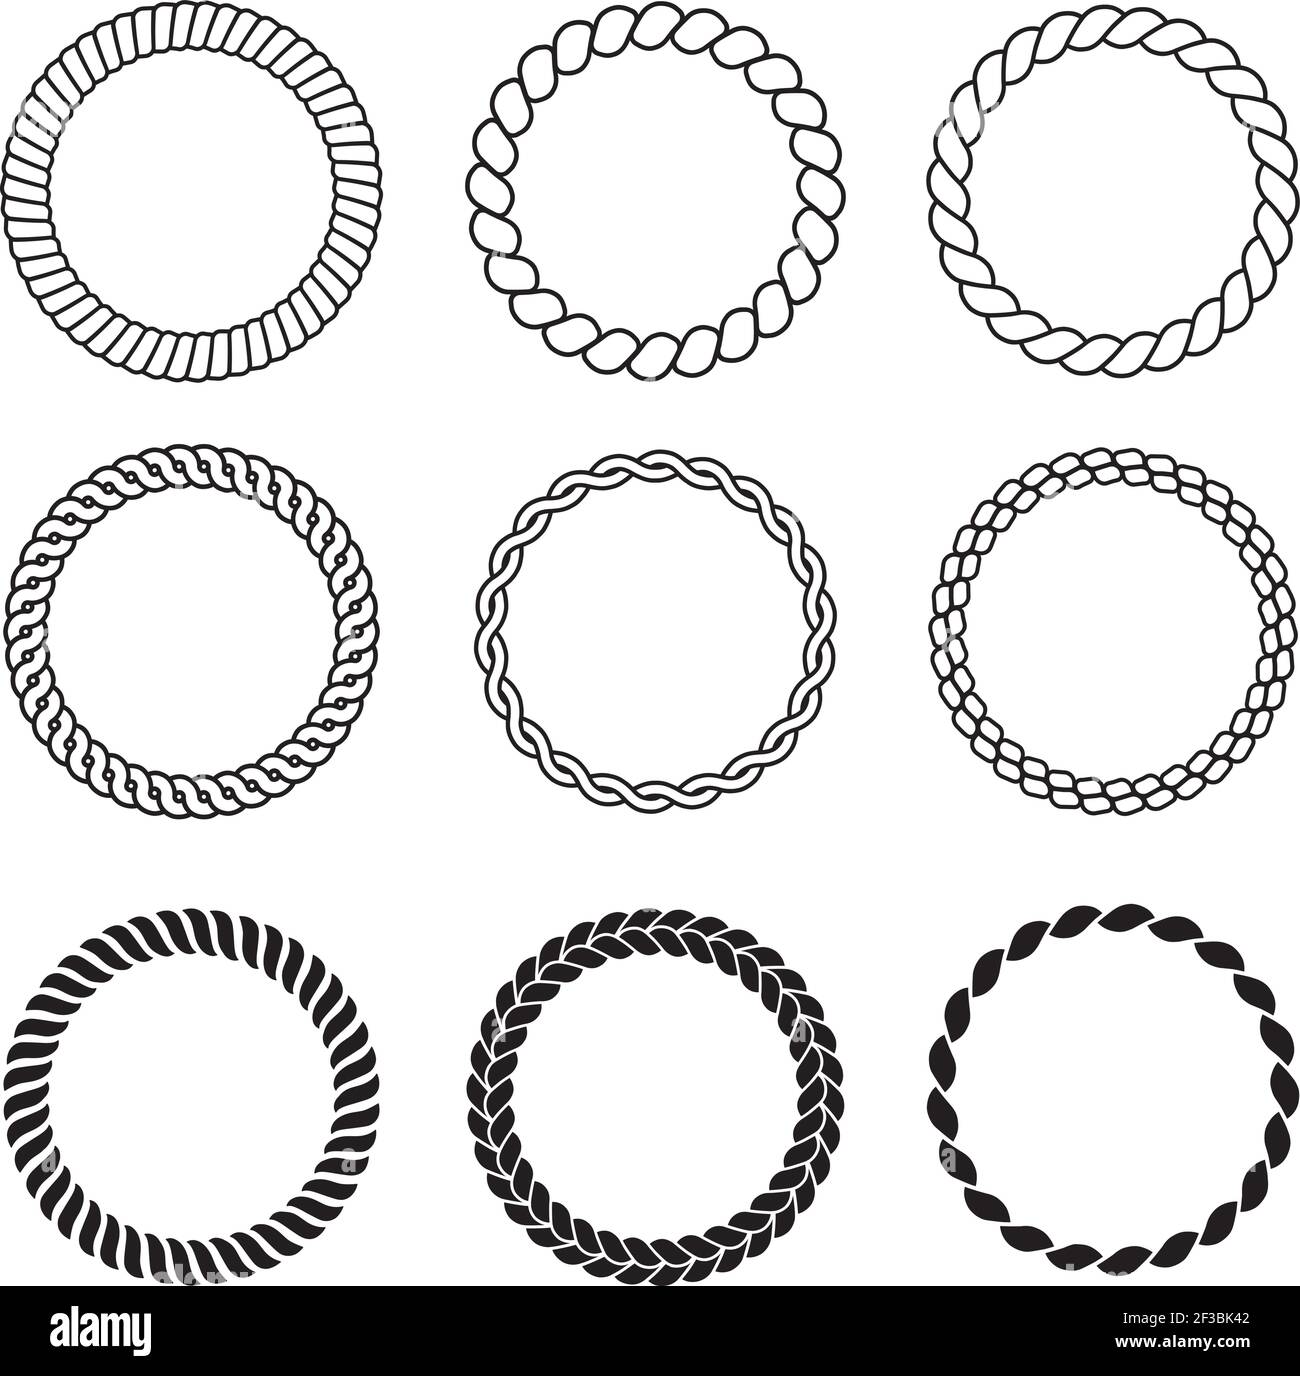 Runde Seilrahmen. Kabel Kreis Formen Stärke dekorative Vintage Seile Vektor-Kollektion Stock Vektor